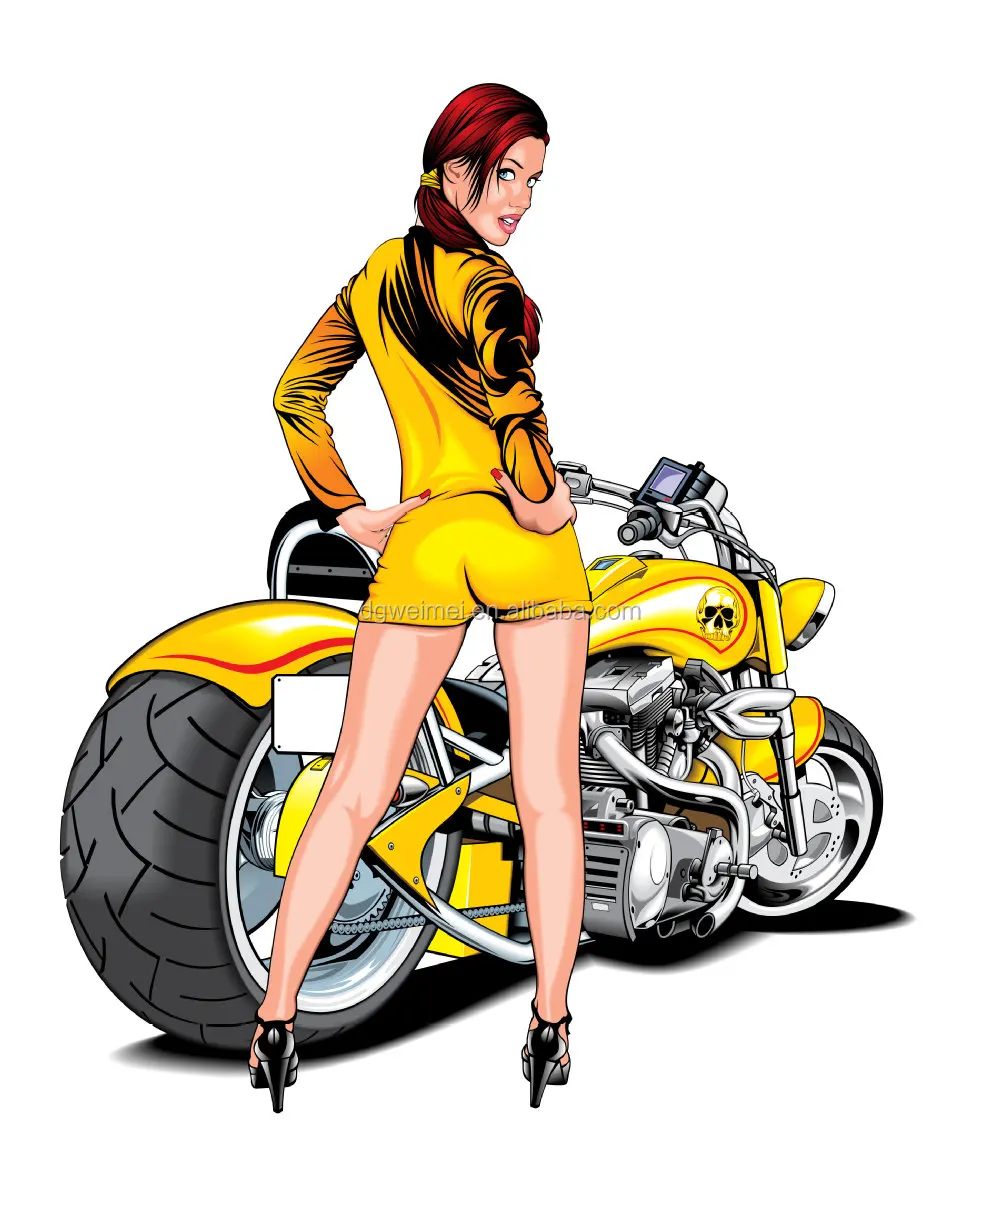 Kustom Desain Kartun Kuning Busana Seksi Motor Gadis Sementara